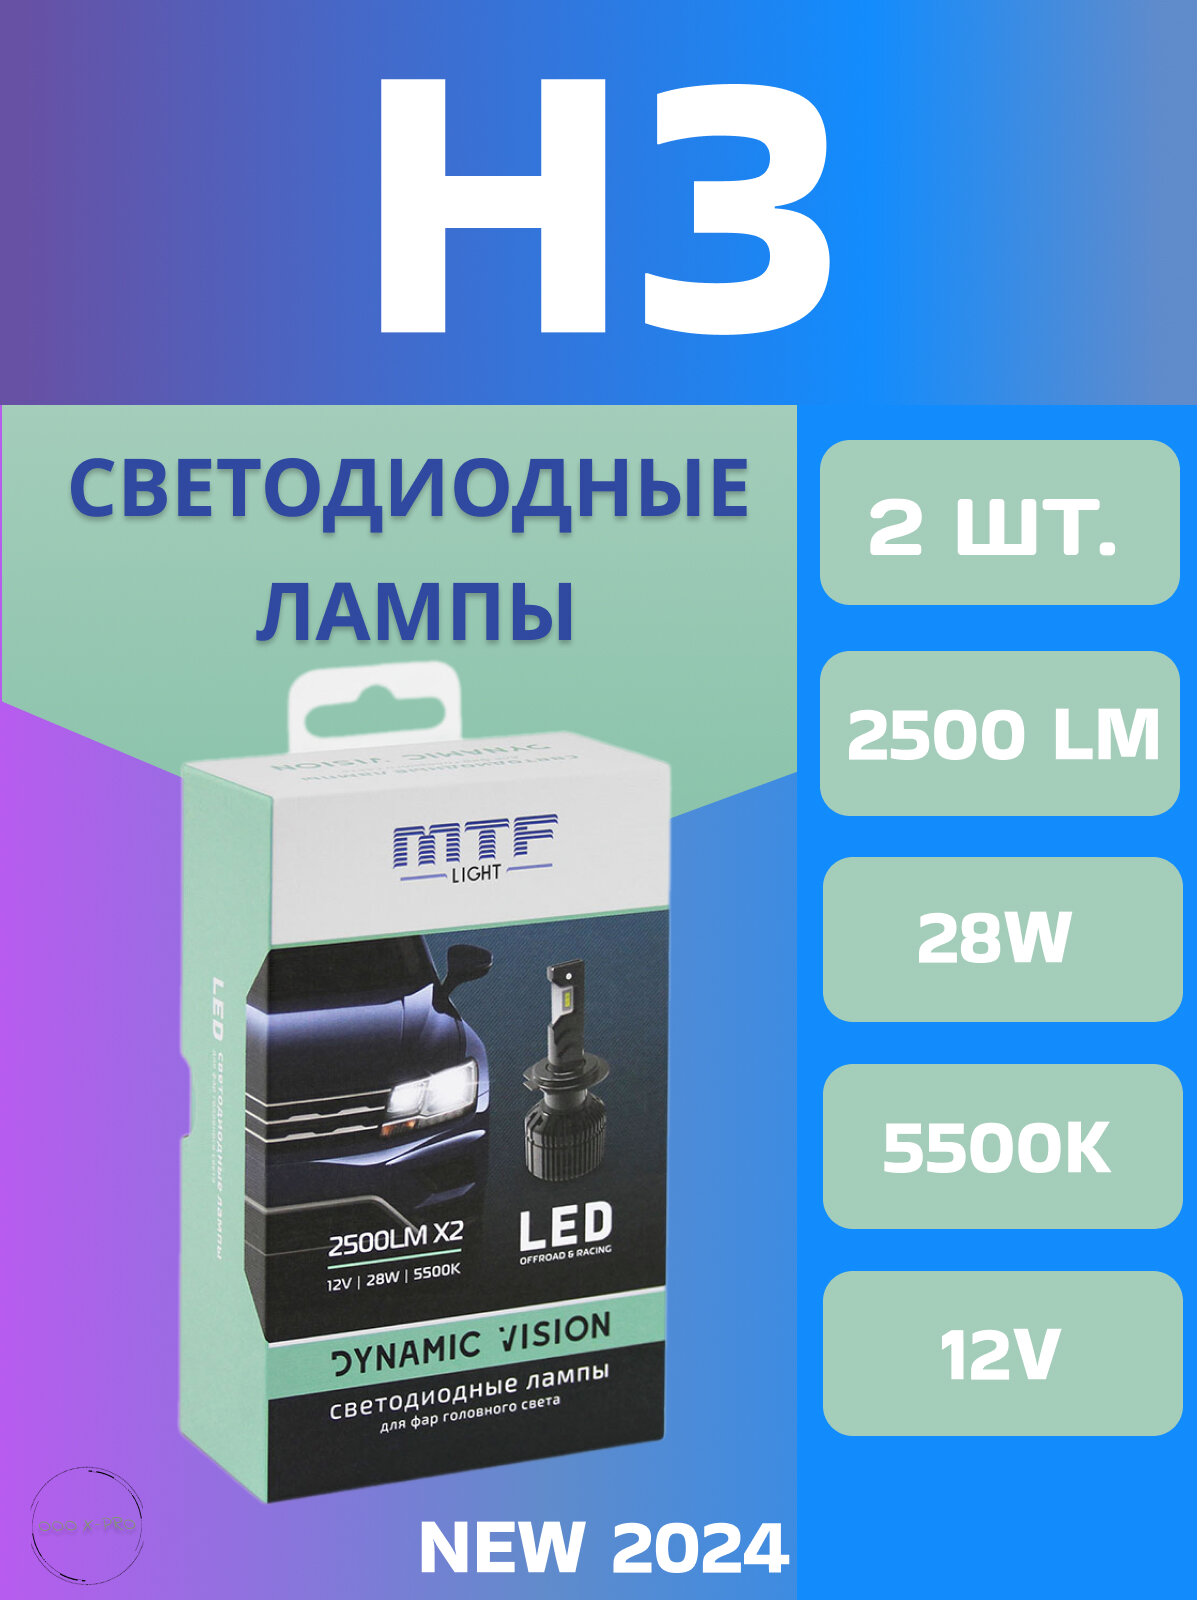 Светодиодные лампы MTF Light серия DYNAMIC VISION LED H3 28W 2500lm 5500K кулер комплект.